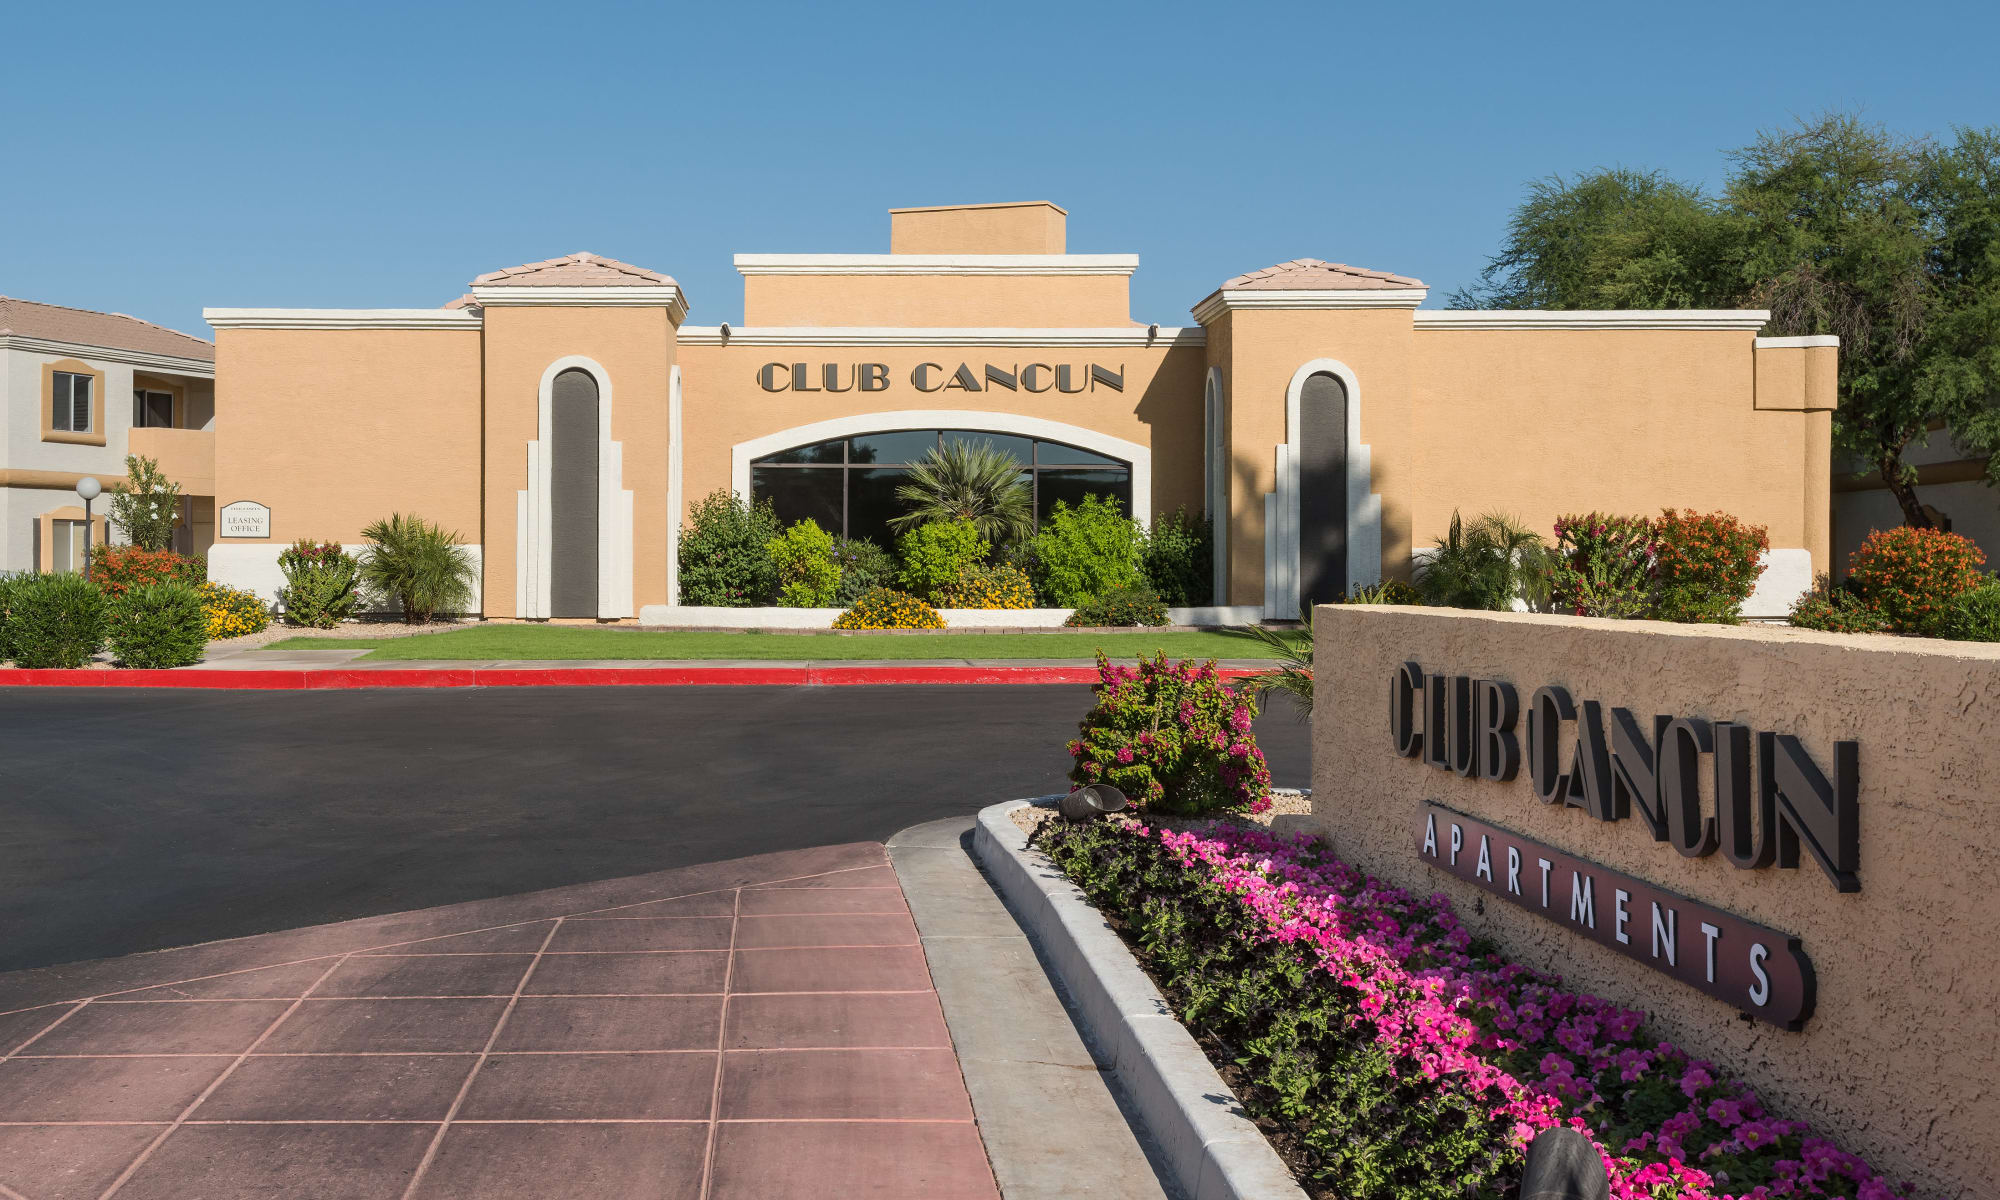 Apartments at Club Cancun in Chandler, Arizona